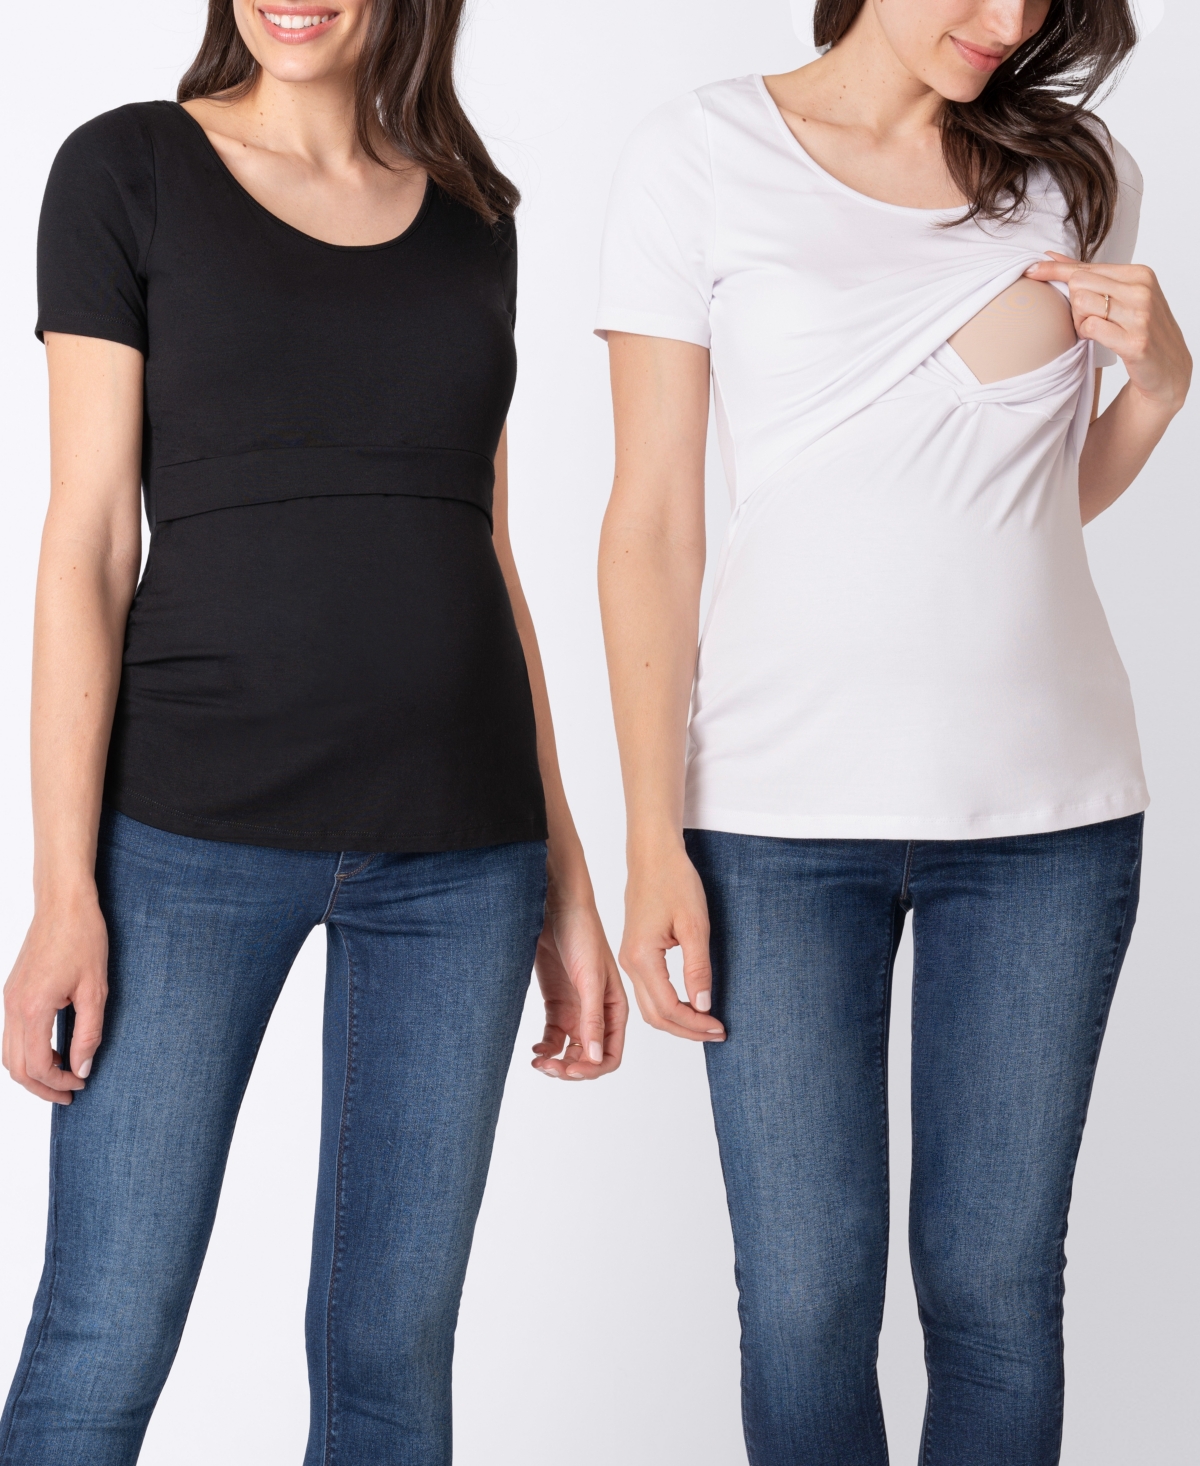 Seraphine Women's Maternity Nursing T-shirts, Twin Pack In Black,white